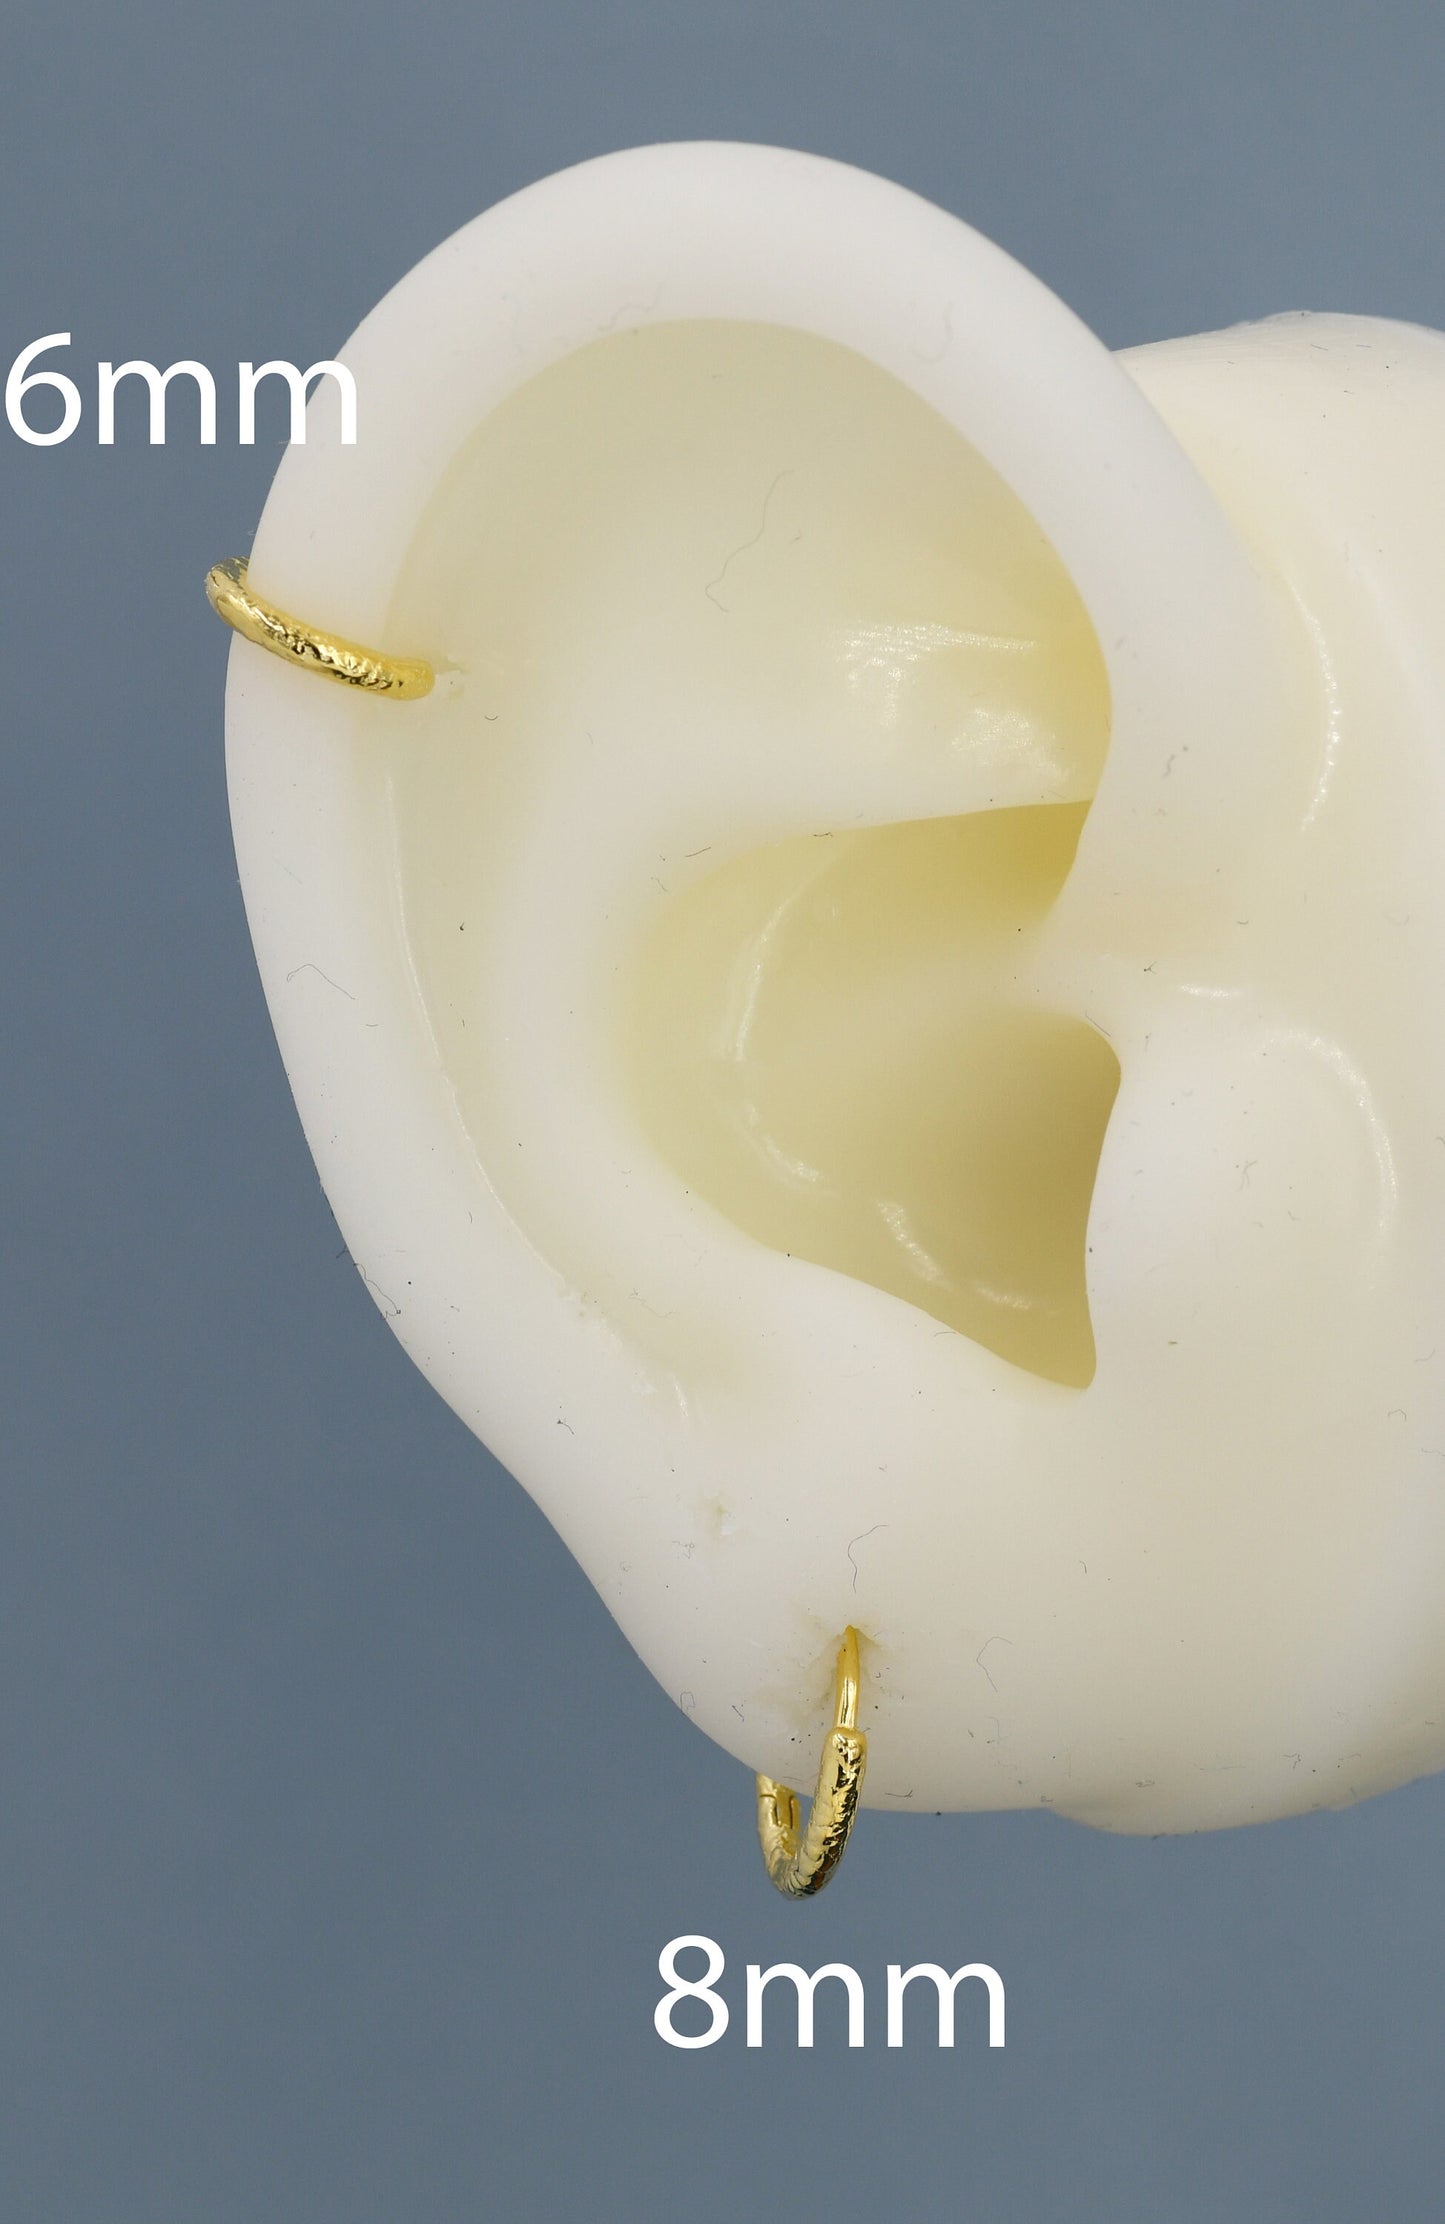 Crumbled Foil Effect Hoop Earrings, 6mm or 8mm, Silver, Gold or Rose Gold,  Foil Earrings, Organic Shape Hoops, Hammered Hoops